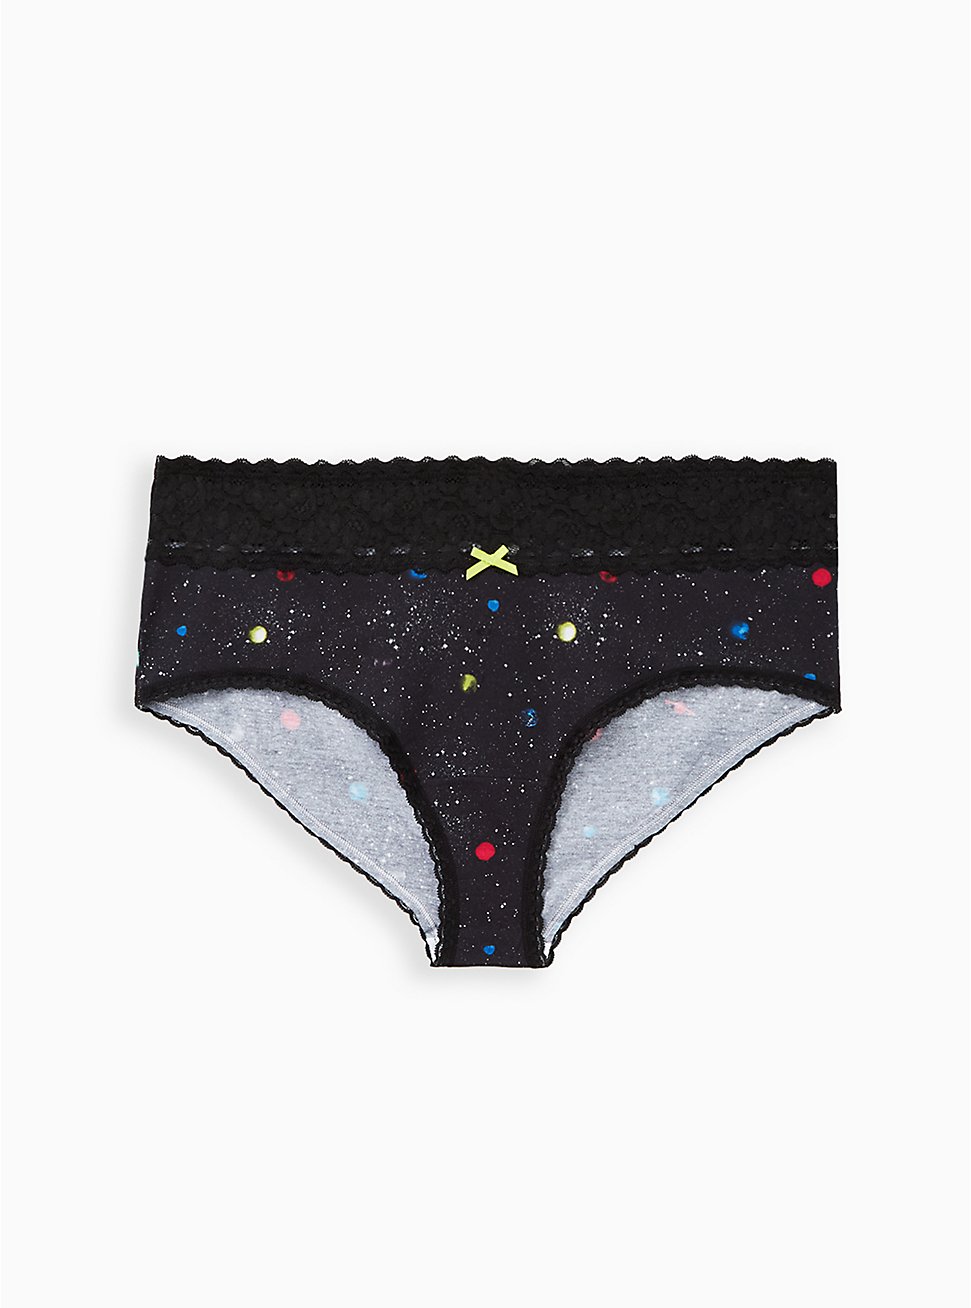 Wide Lace Cheeky Panty - Cotton Intergalactic Black, MULTI, hi-res